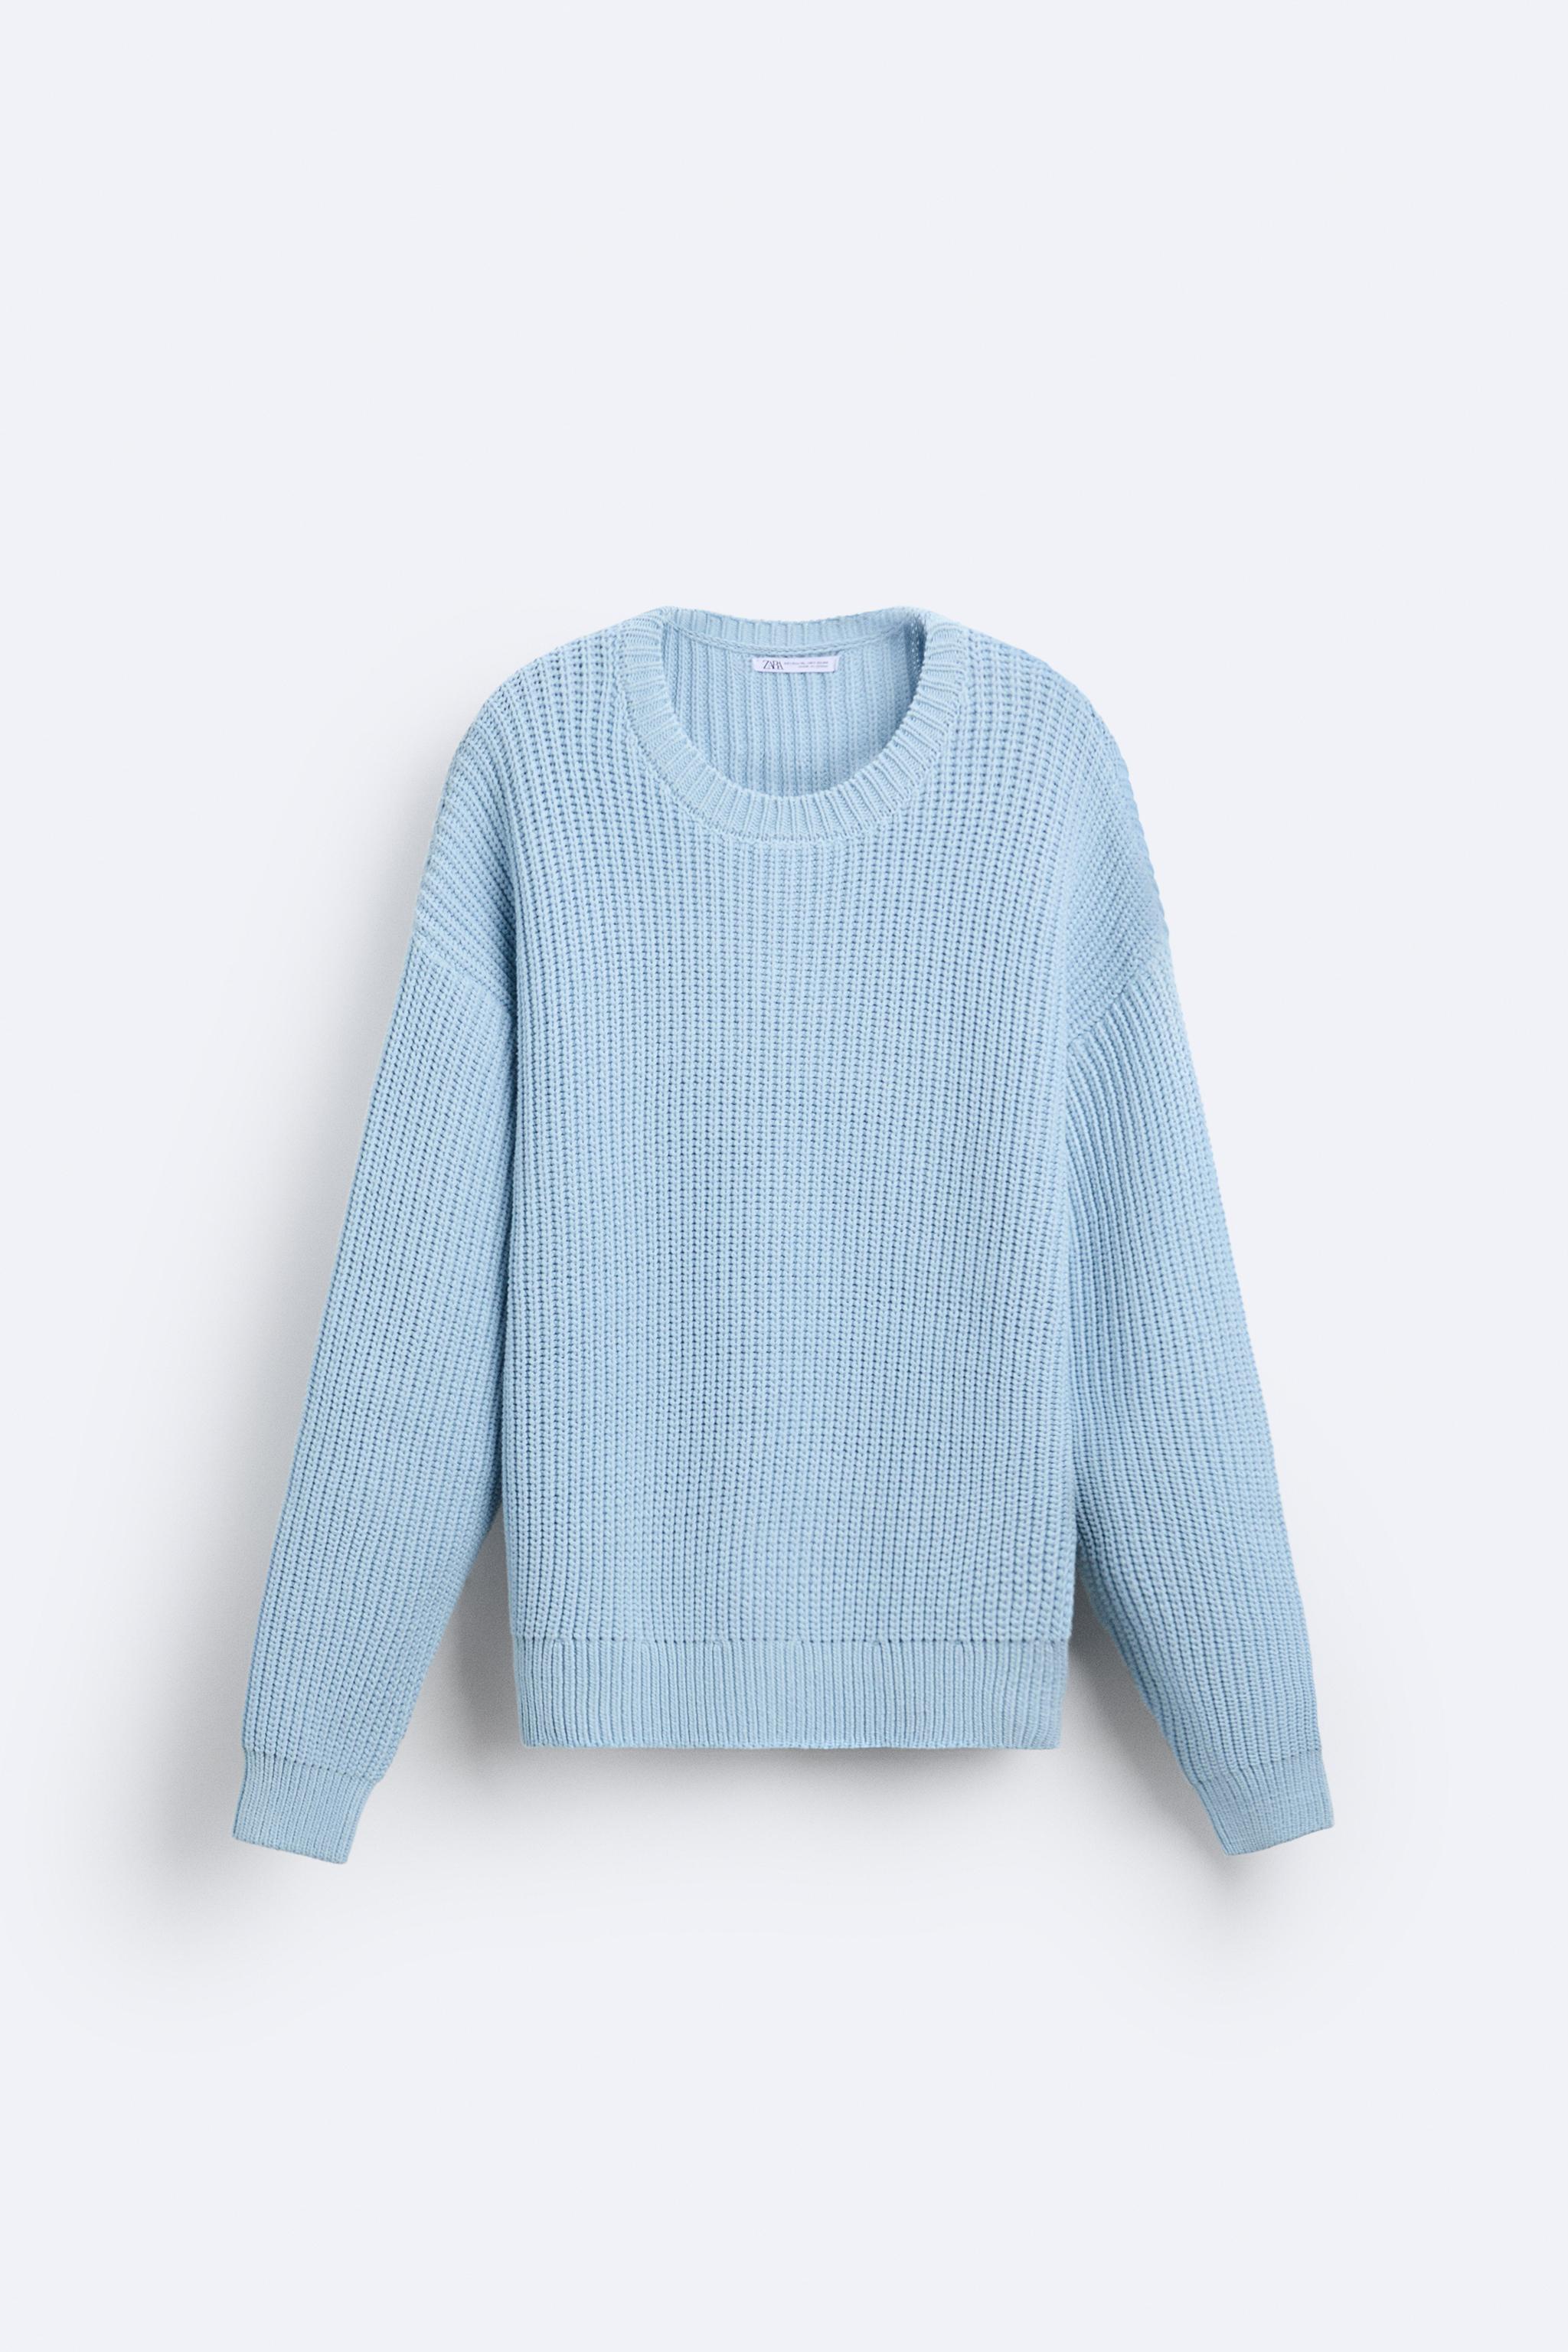 Zara, Sweaters, Zara Light Blue Cream Soft Faux Fur Collar Ribbed Knit  Sweater Cardigan